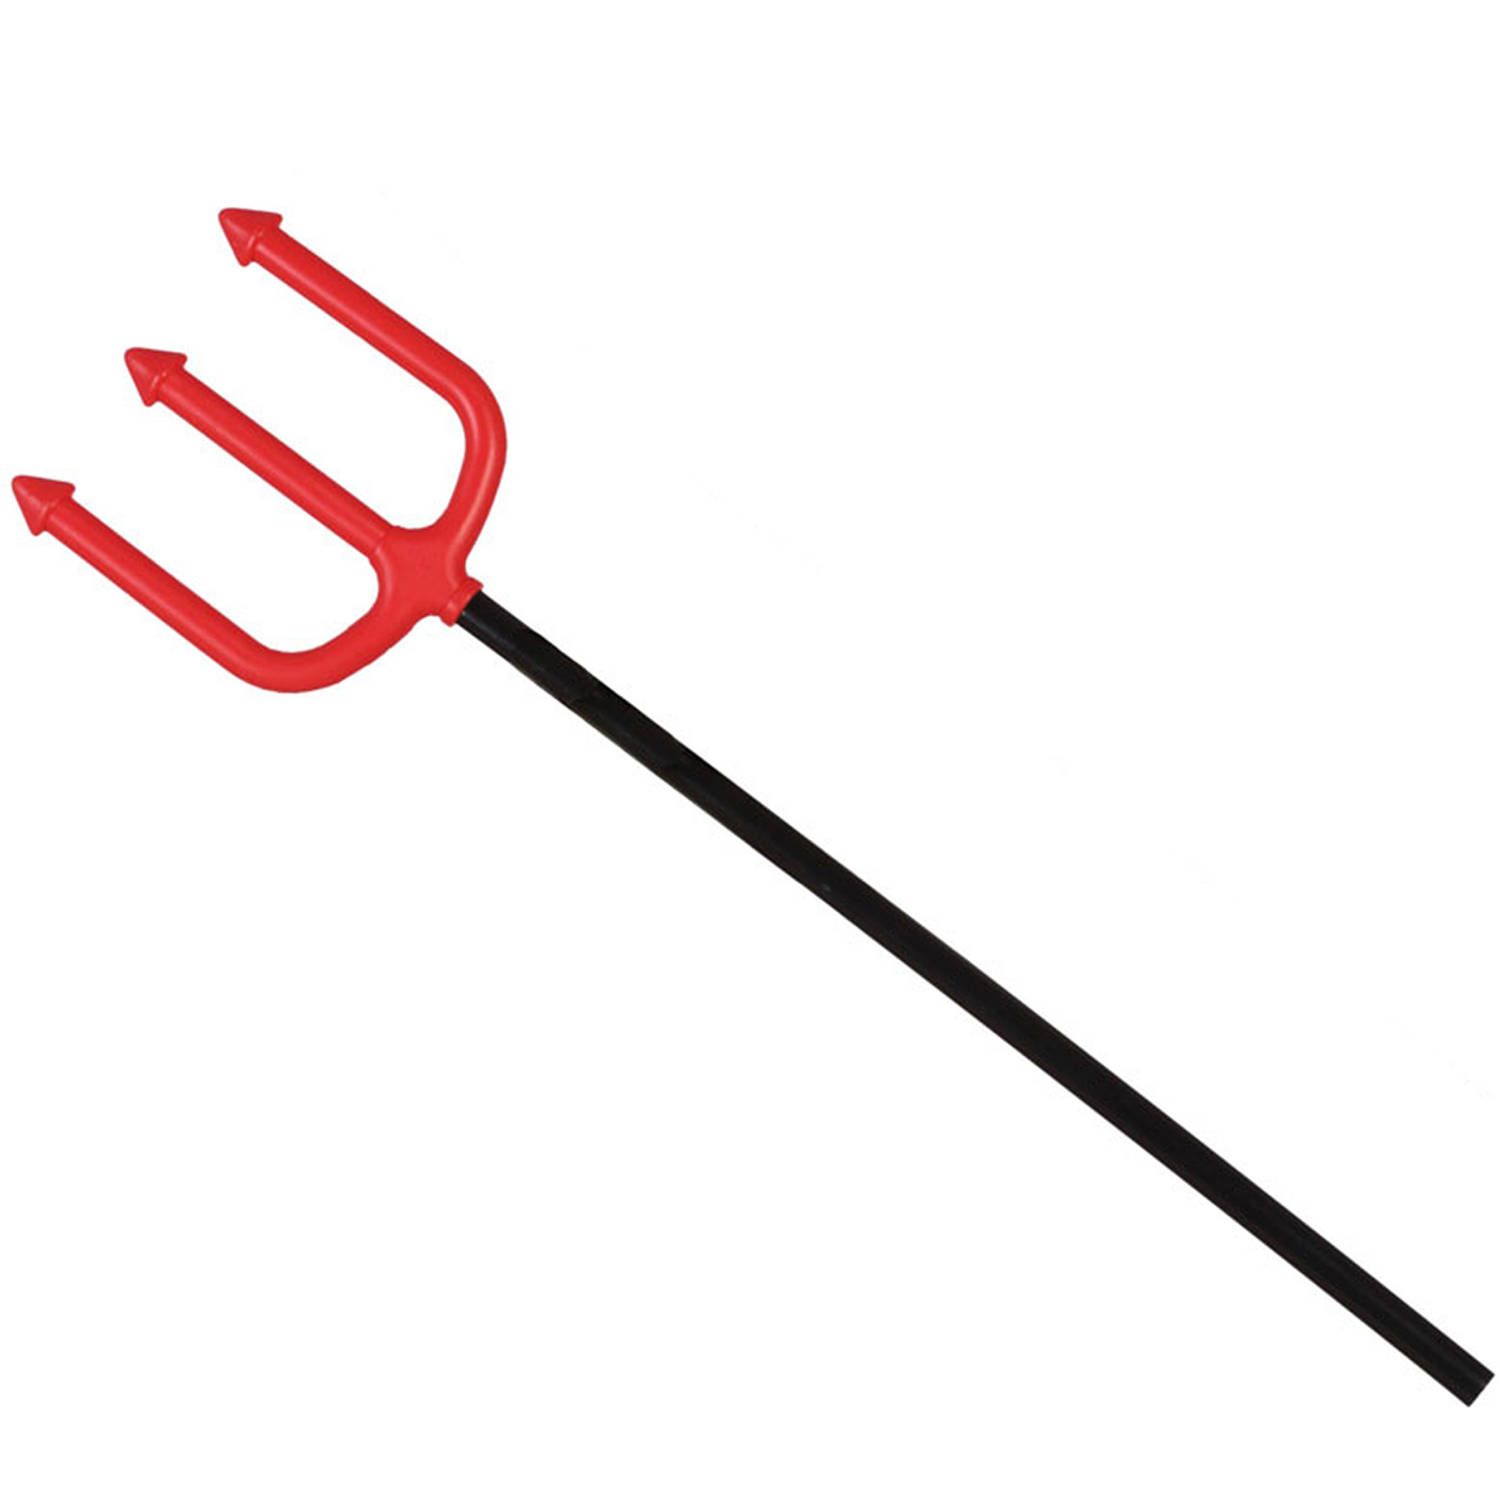 Duivel Trident/drietand vork - 51 cm - rood - plastic - Halloween verkleed accessoires